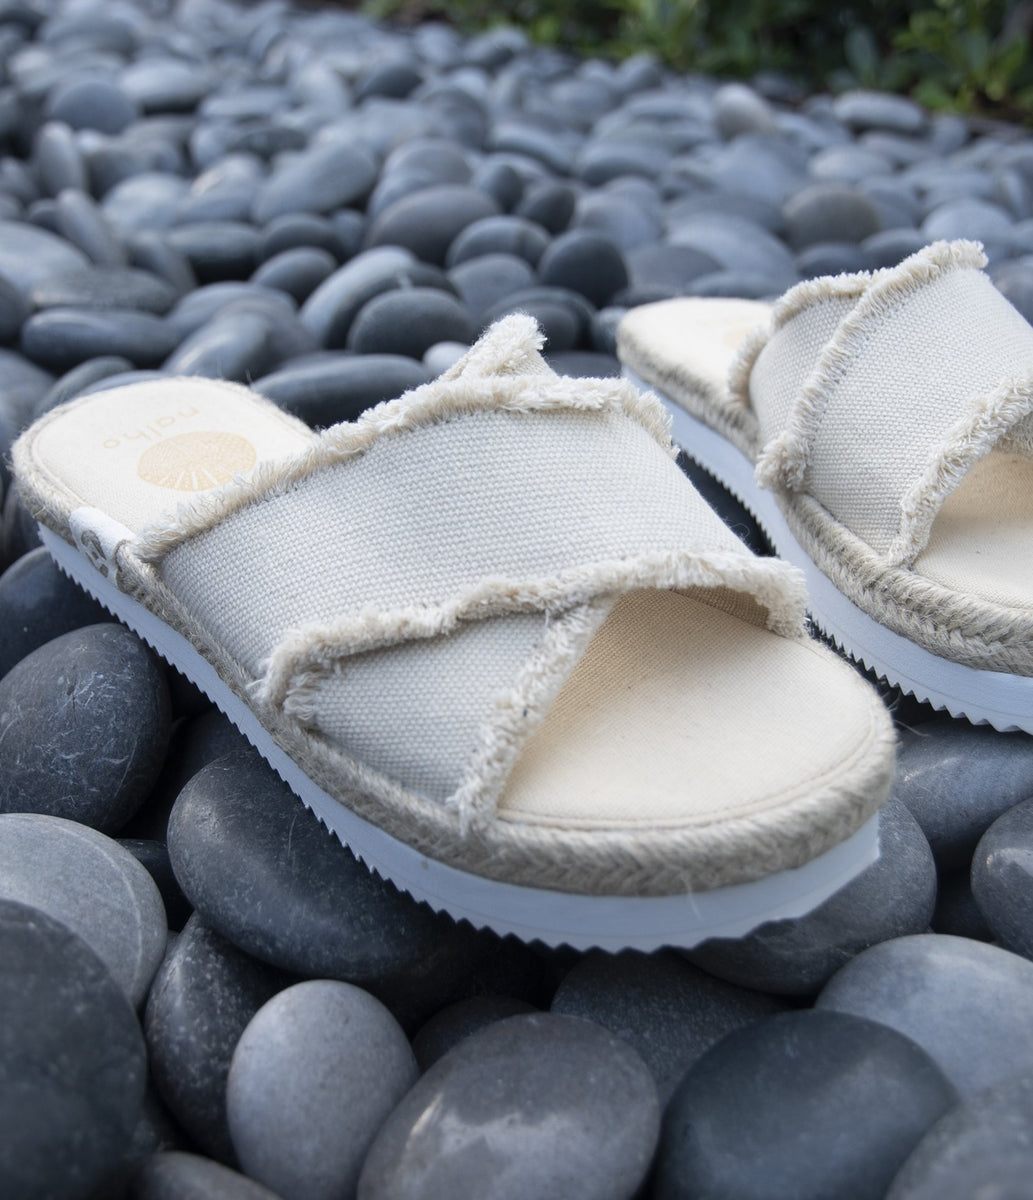 Comfortable Beige Platforms Sandals Espadrilles yoga mat sole Comfort